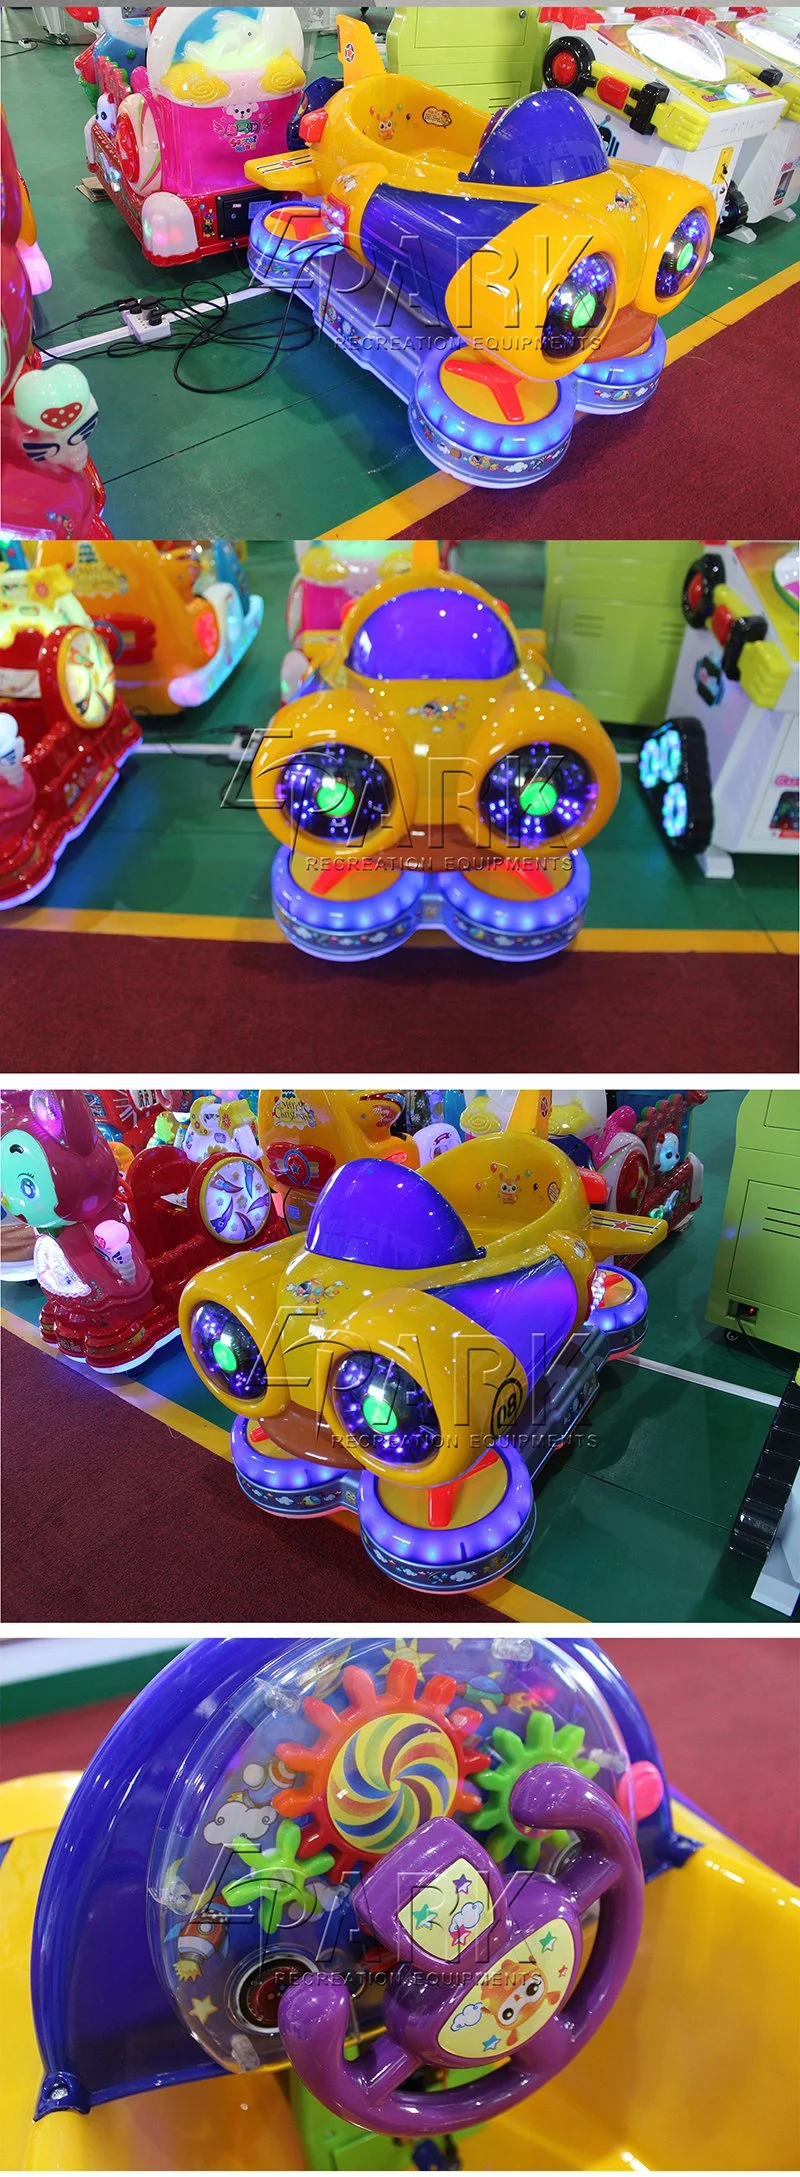 Epark Amusement Park Kids Ride Kids Toy Machine Spaceship Swing Car Game Machine Coin Operated